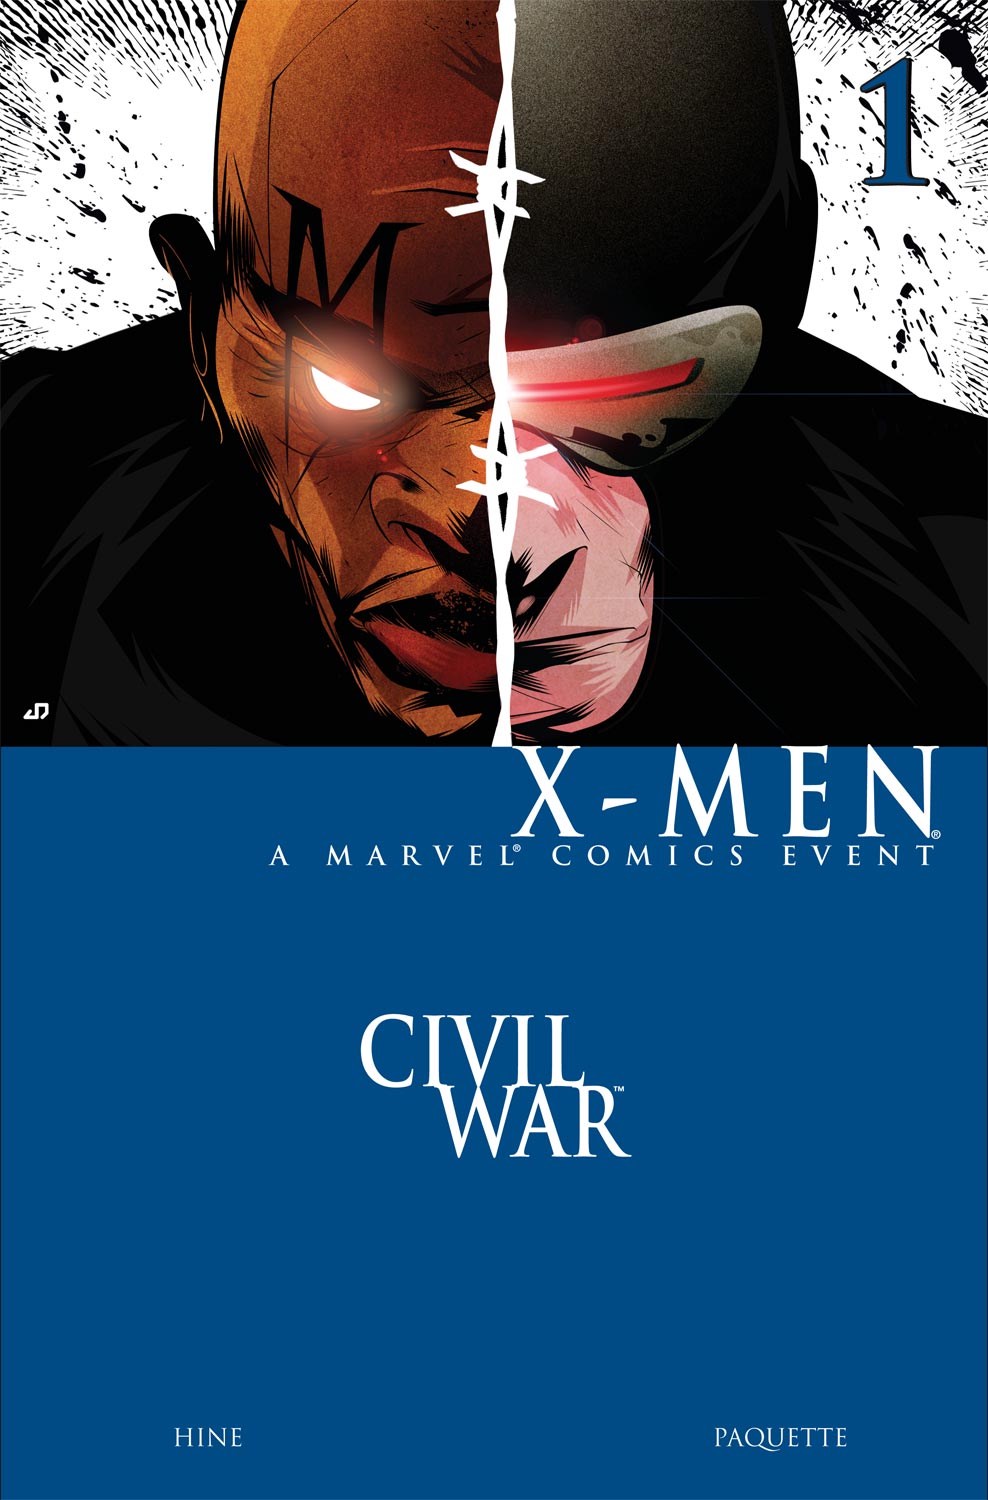 Civil War: X-Men (2006) #1